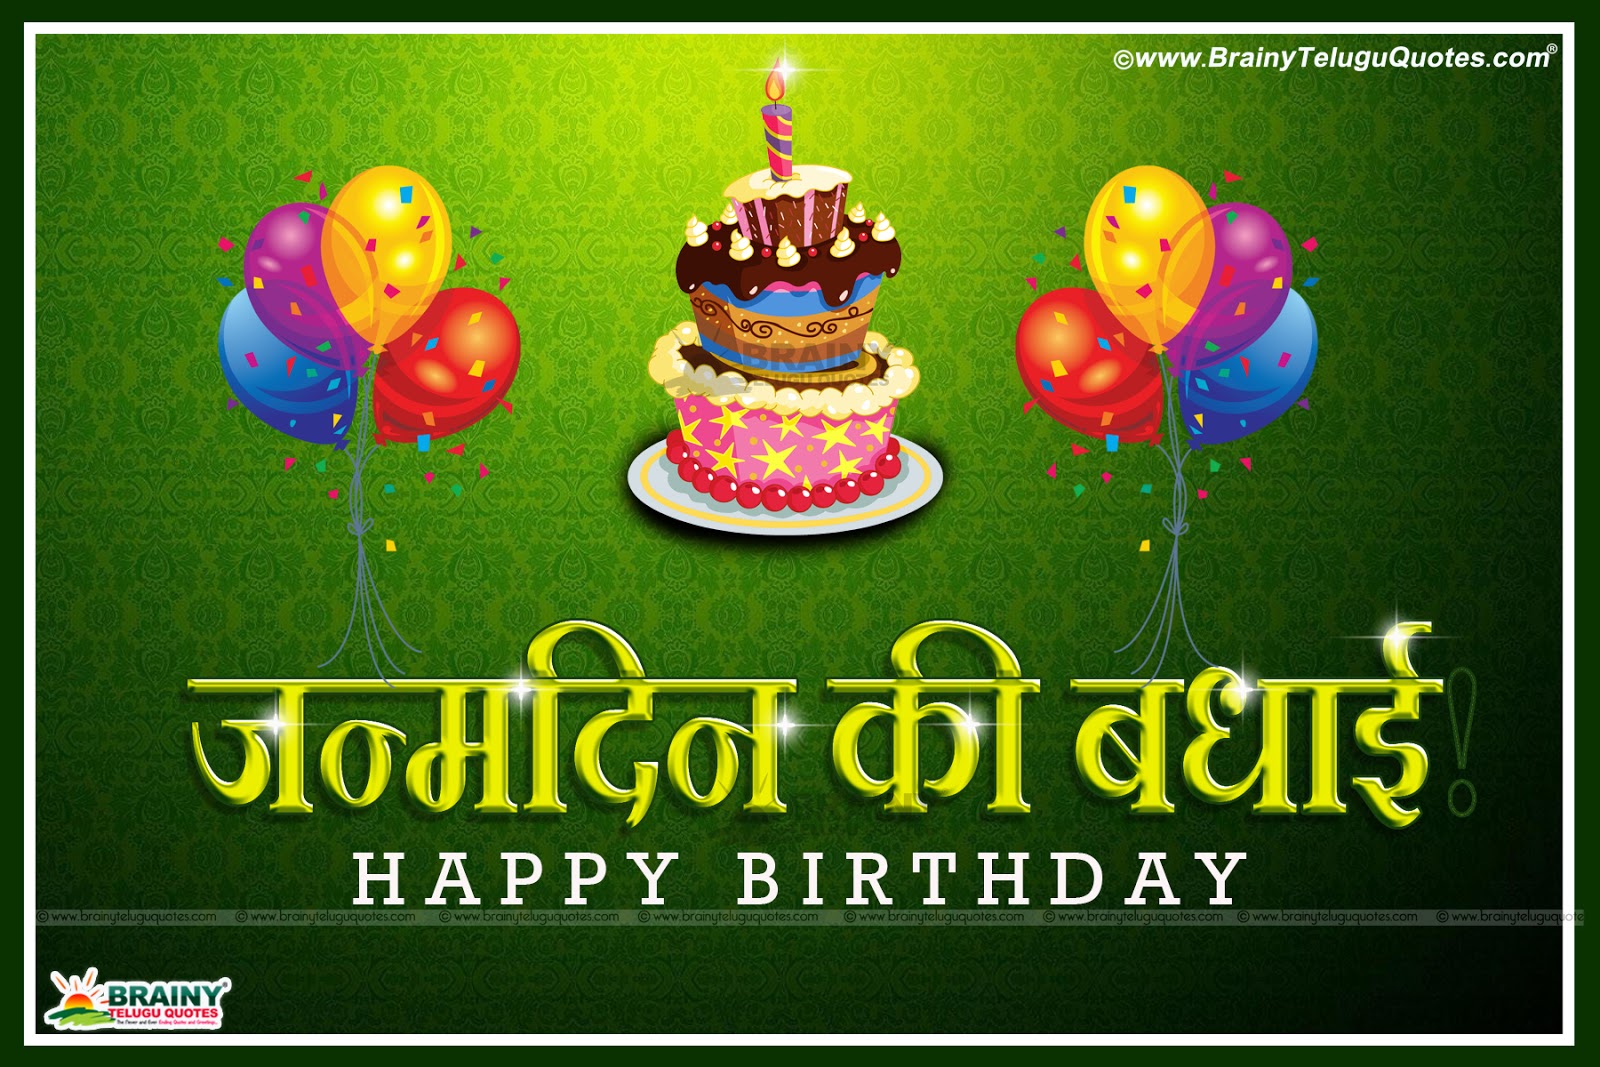 День рождения 26 июня. Happy Birthday Hindi. Картинка Happy Birthday на индийском языке. С днём рождения на индийском языке. Happy Birthday Wishes for friend.